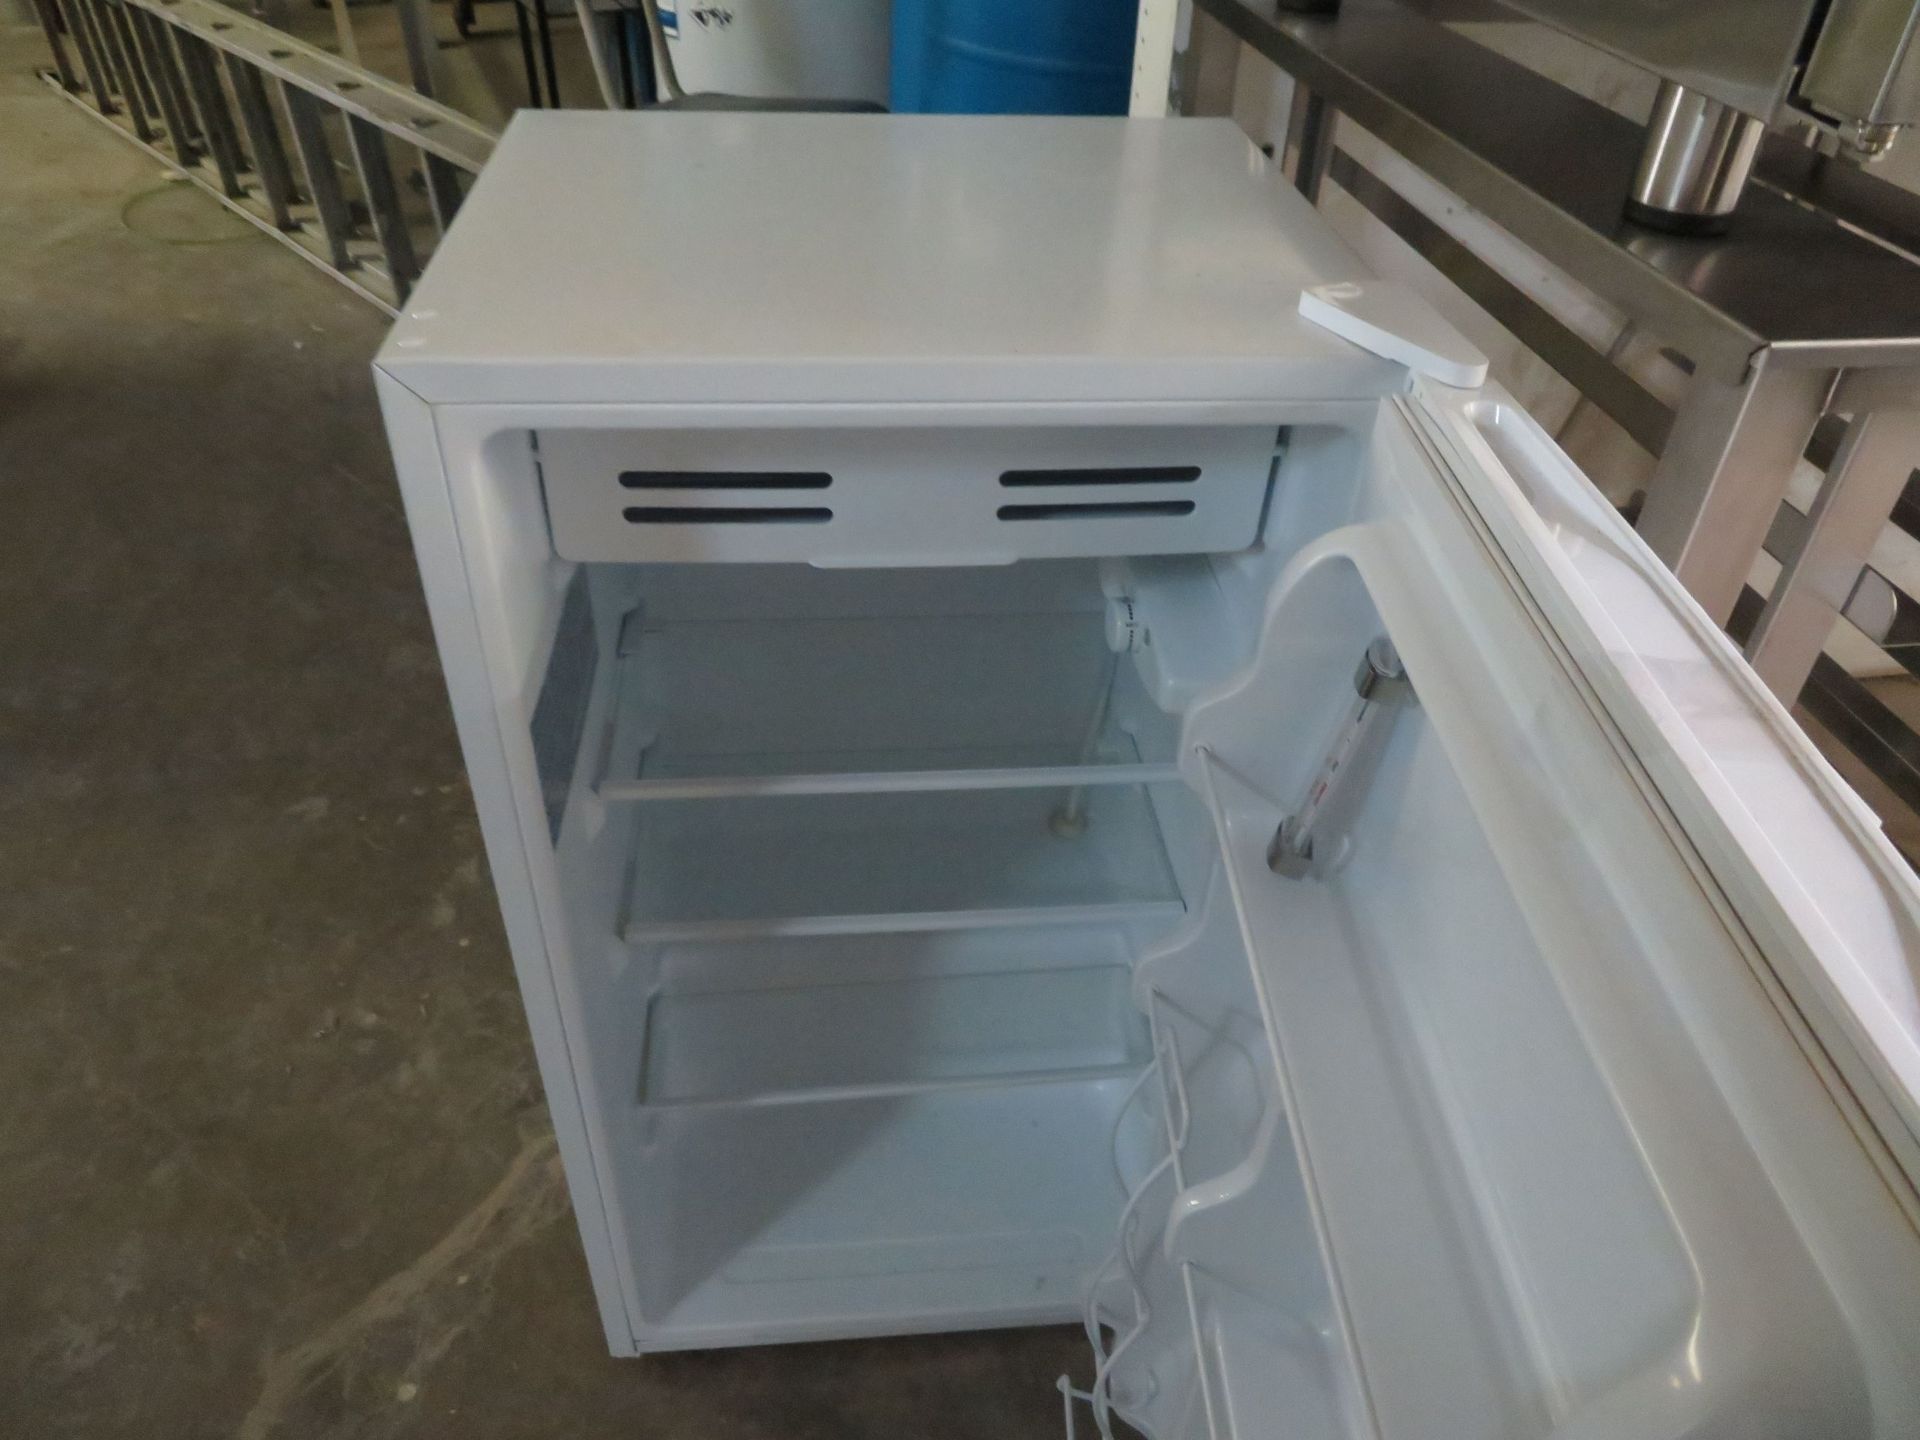 MASTERCHEF refrigerator, Mod: D43-0289-2, approx. 18"w x 17"d x 33"h - Image 2 of 3